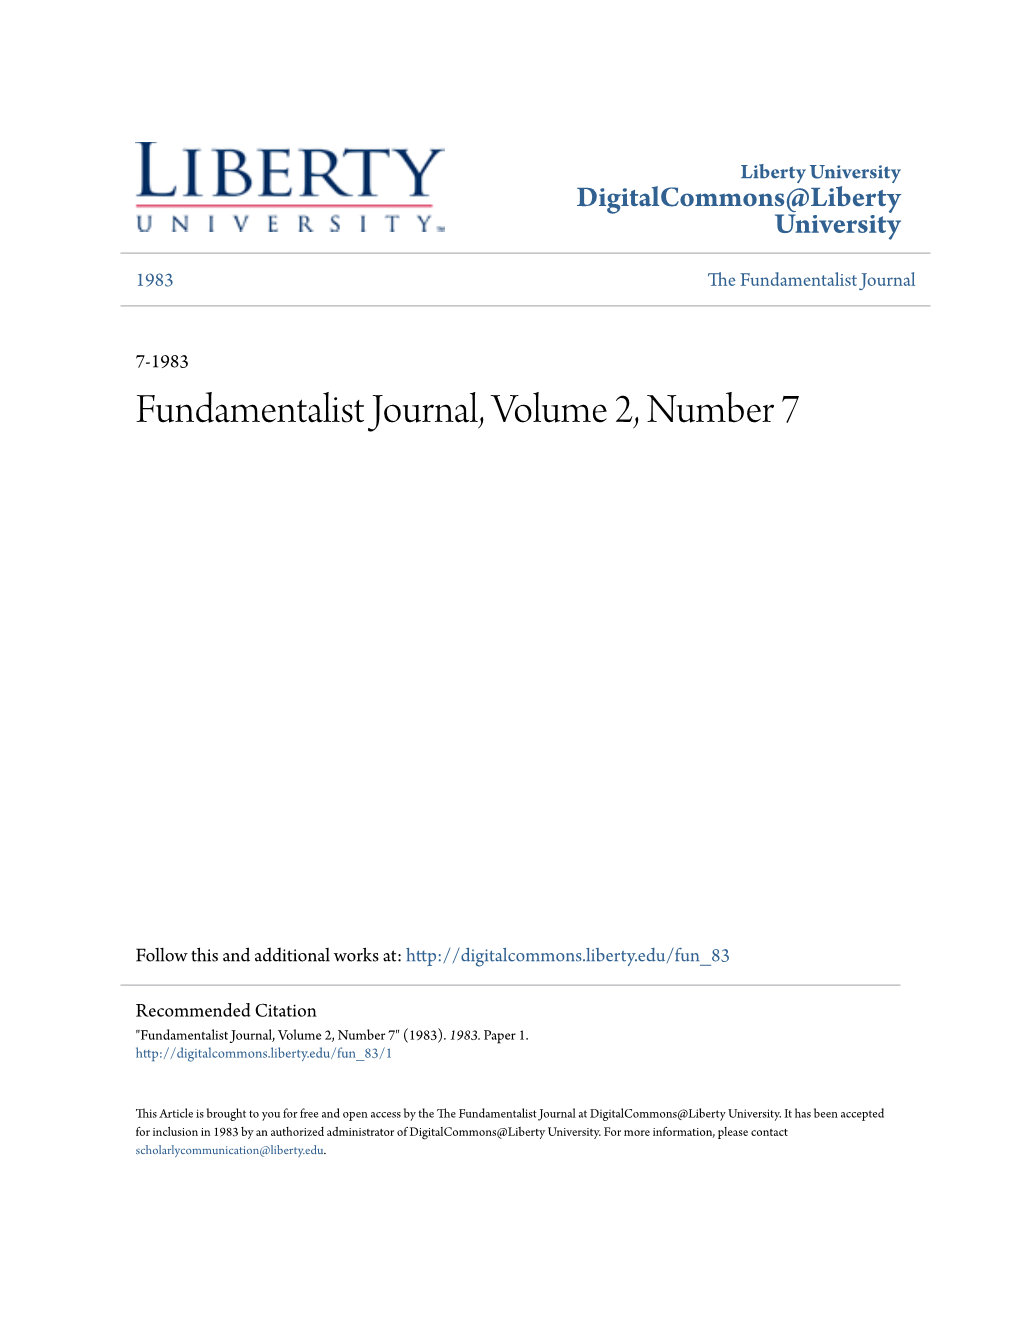 Fundamentalist Journal, Volume 2, Number 7